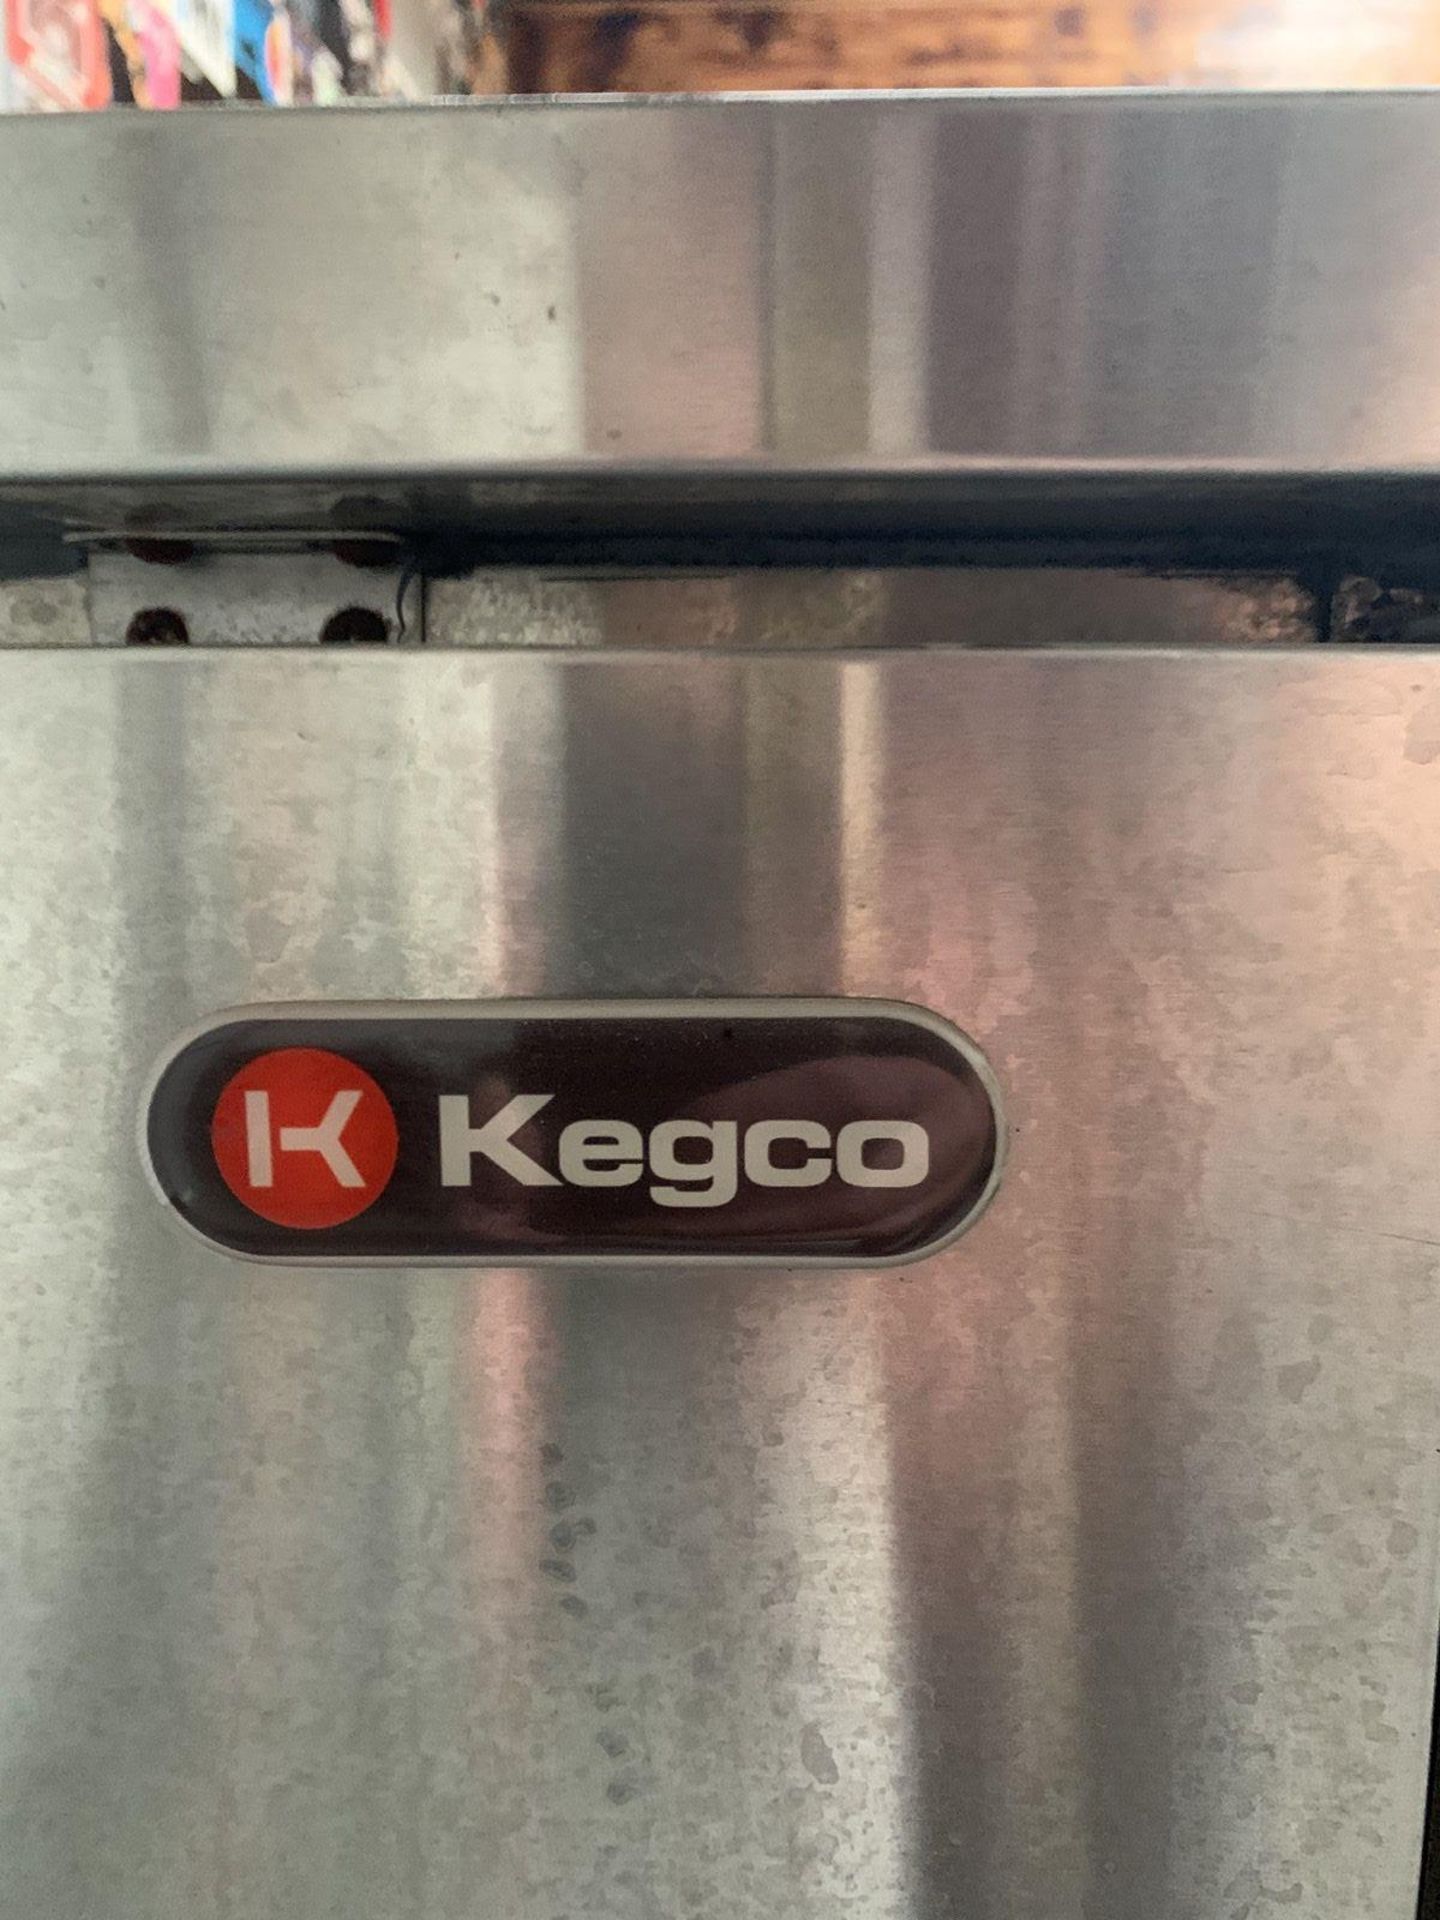 Kegco Model XCK-2460S Kegerator with Dual 4-Draft Towers | Subj to Bulk | Rig Fee: $350 - Image 6 of 10